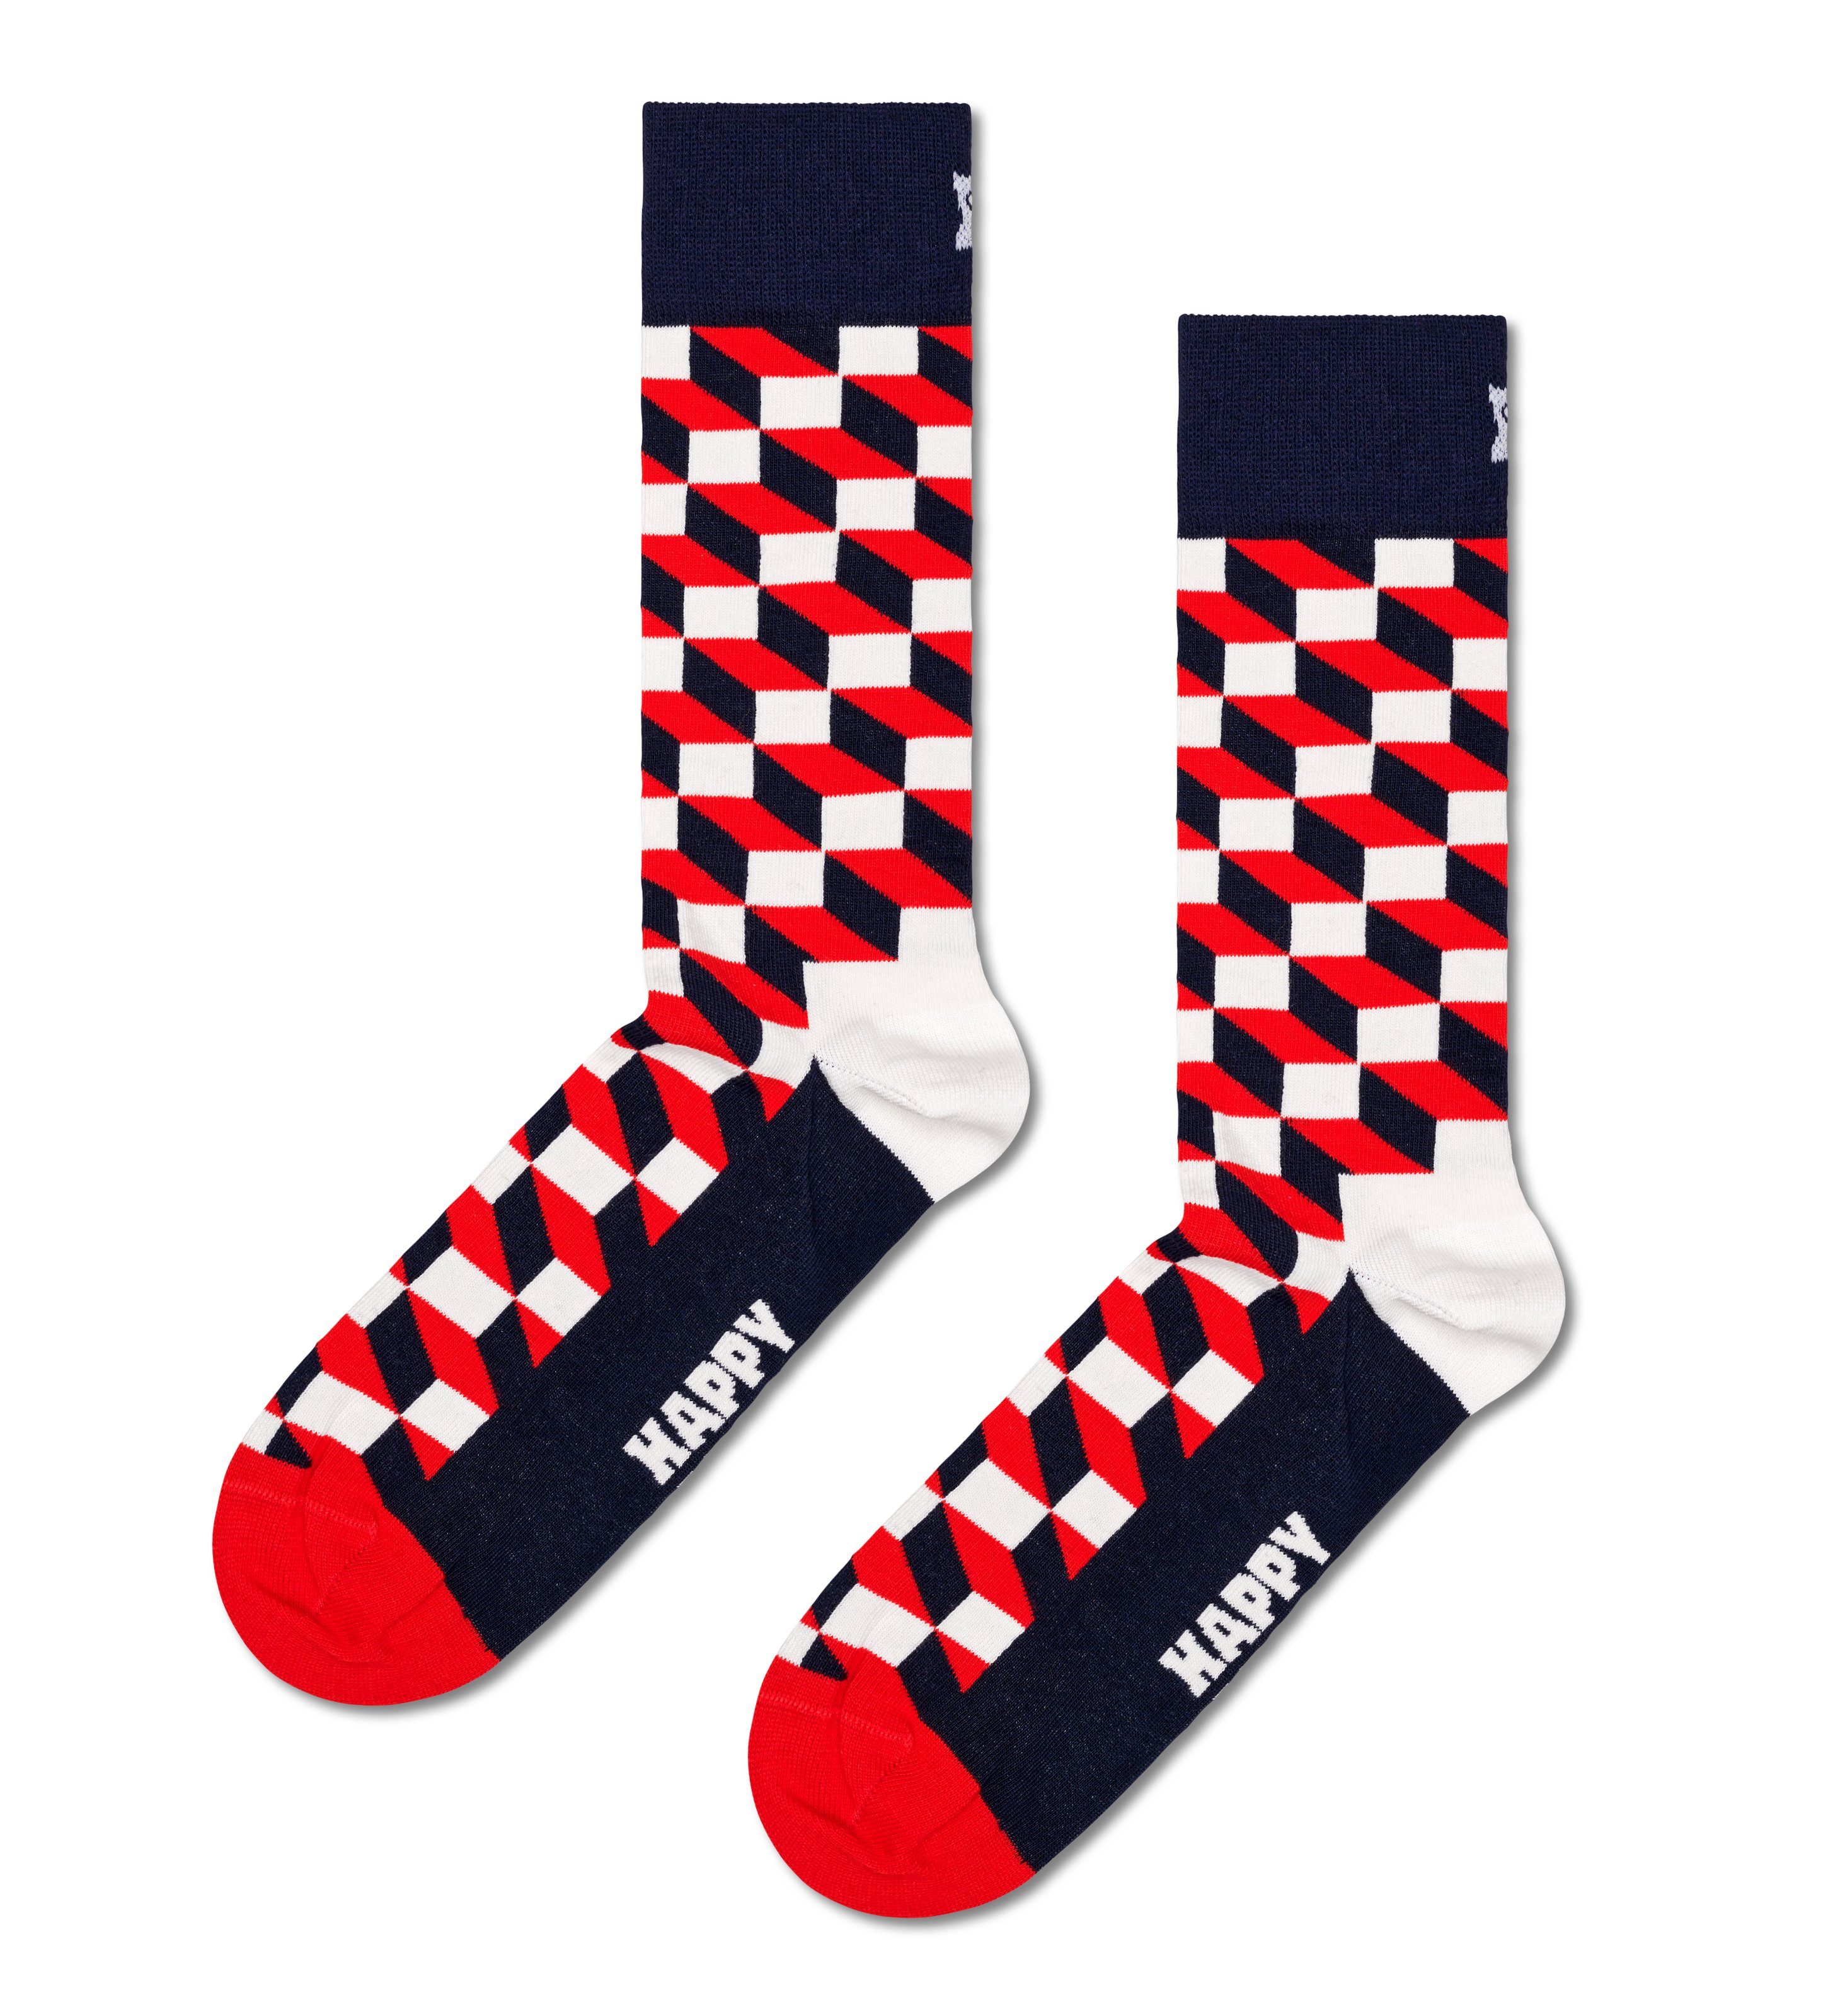 Happy Socks Socken 4-Pack & Navy Stripes Classic Classic (Packung, Set Dots Socks Gift 4-Paar) 2 Navy